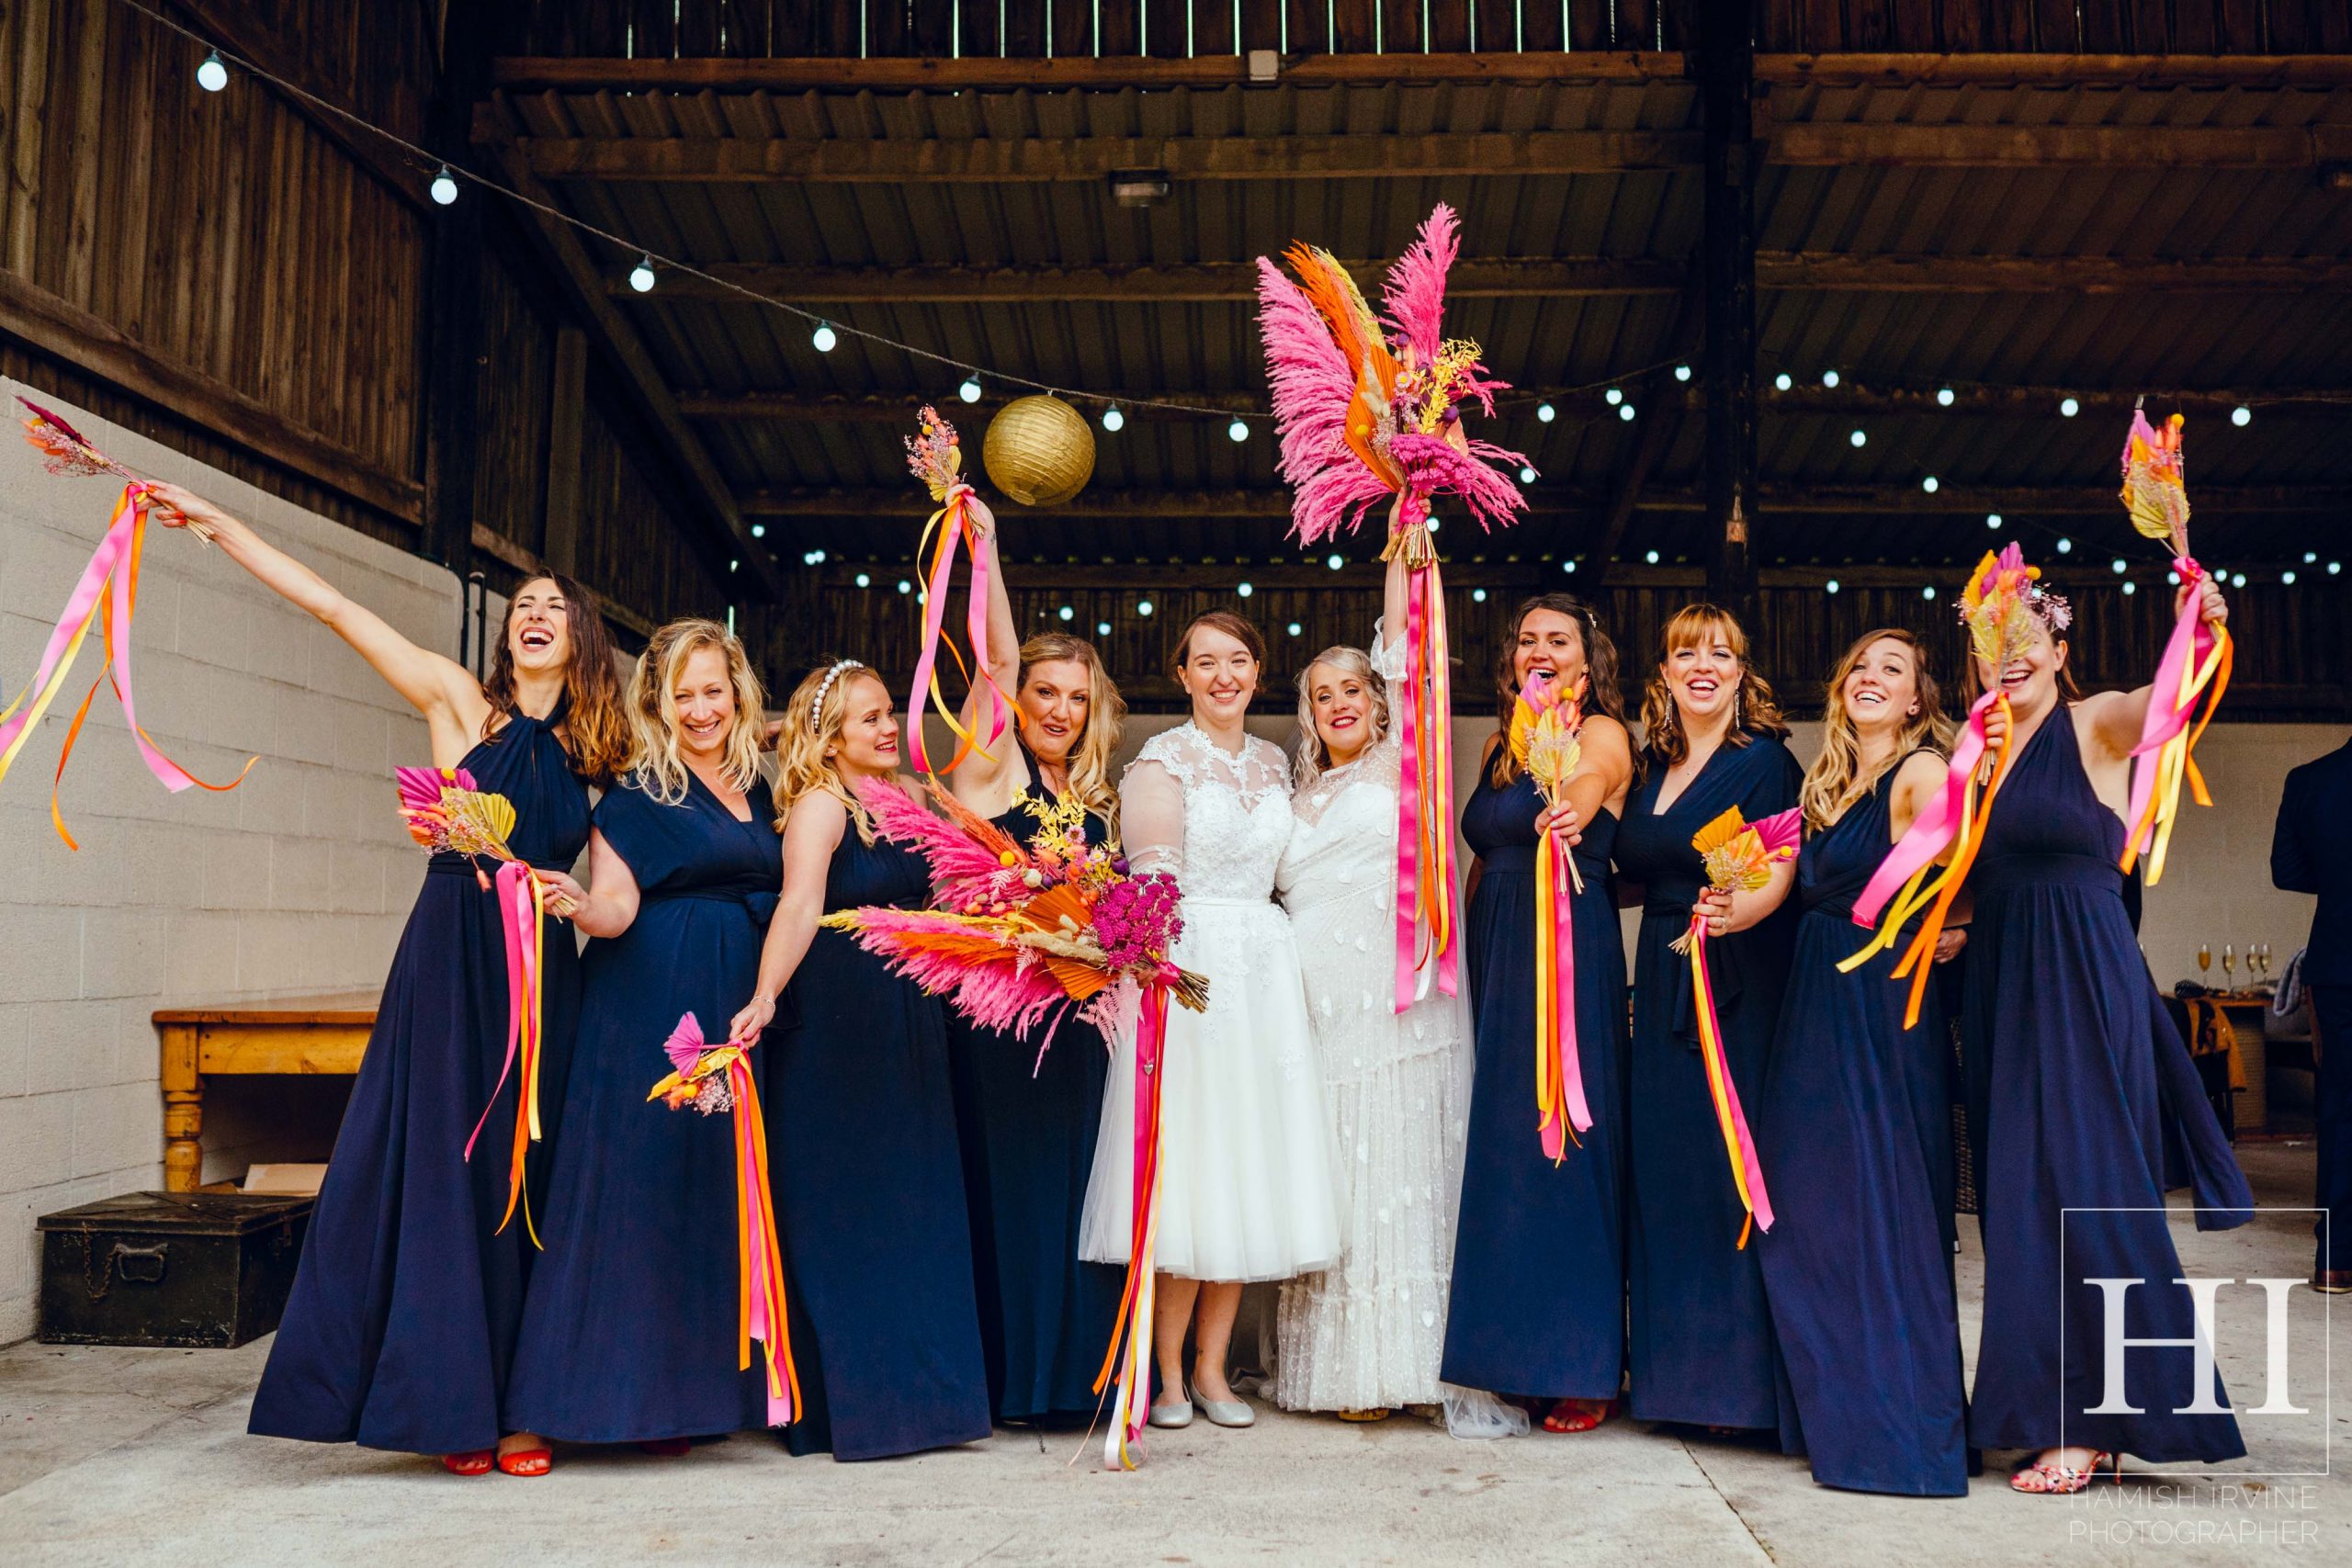 Barmbyfield Barns Wedding Photographer York Hamish Irvine Photography Suzie Rosie Leeds Colourful same sex